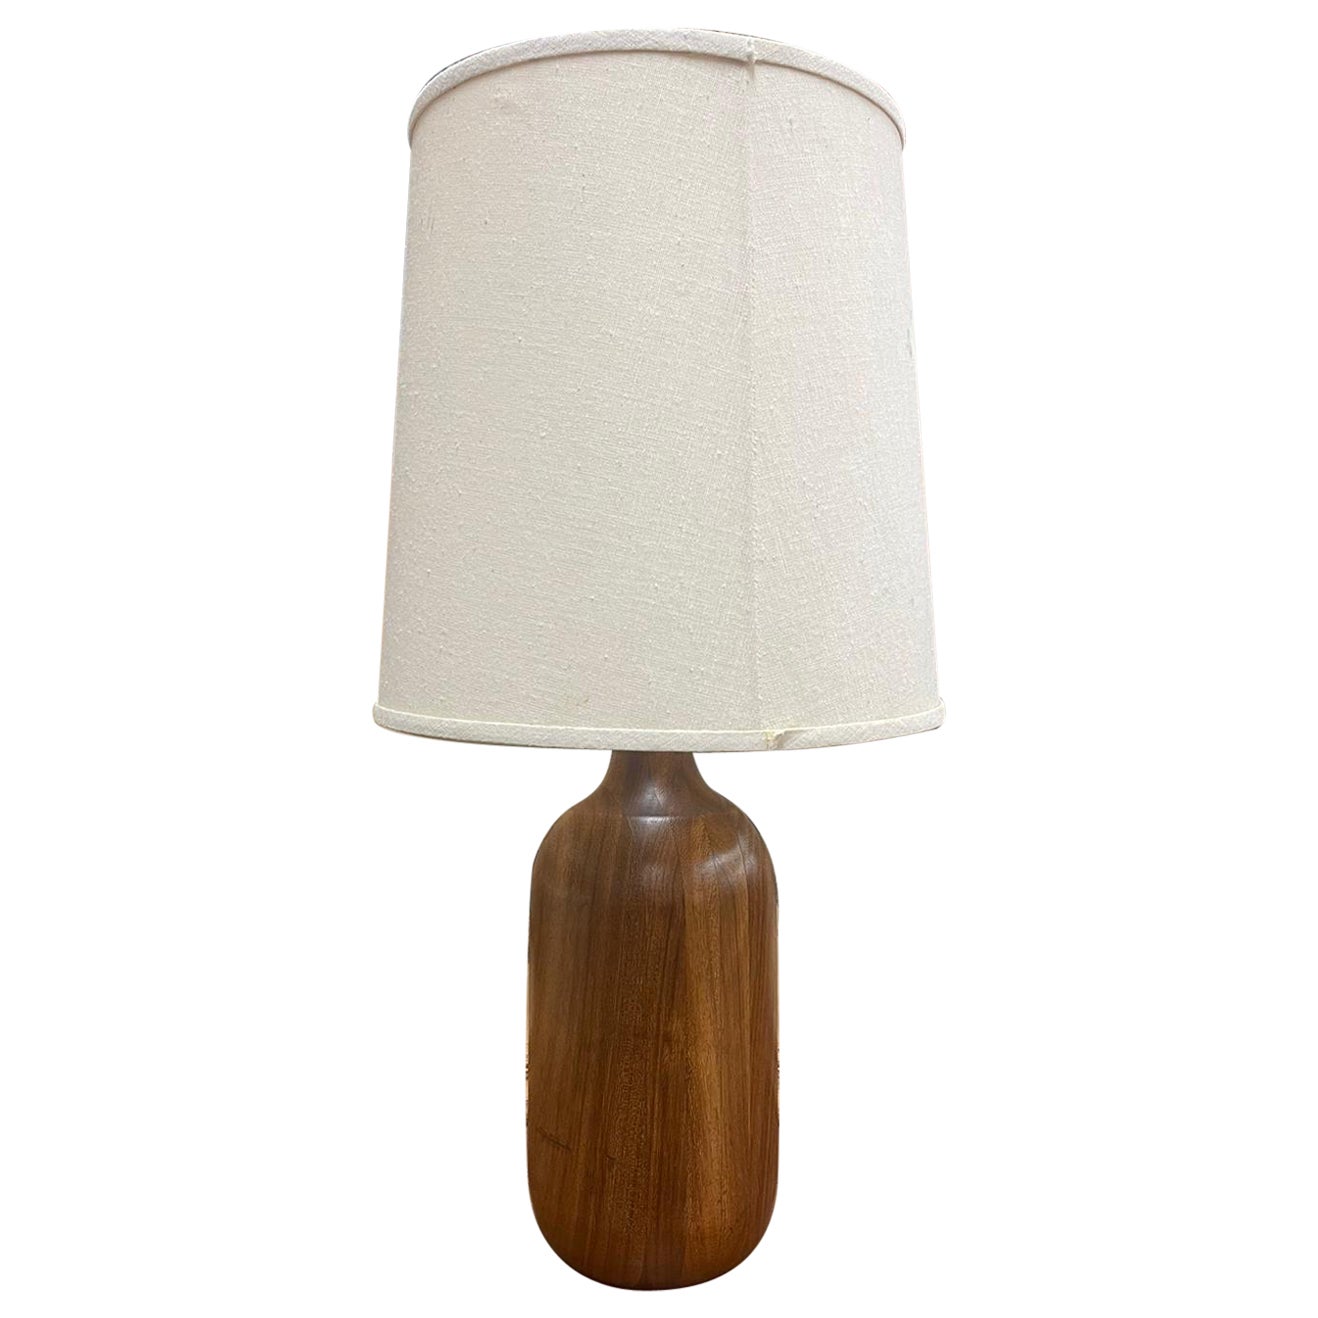 Vintage Mid Century Modern Style Walnut Toned Table Lamp.